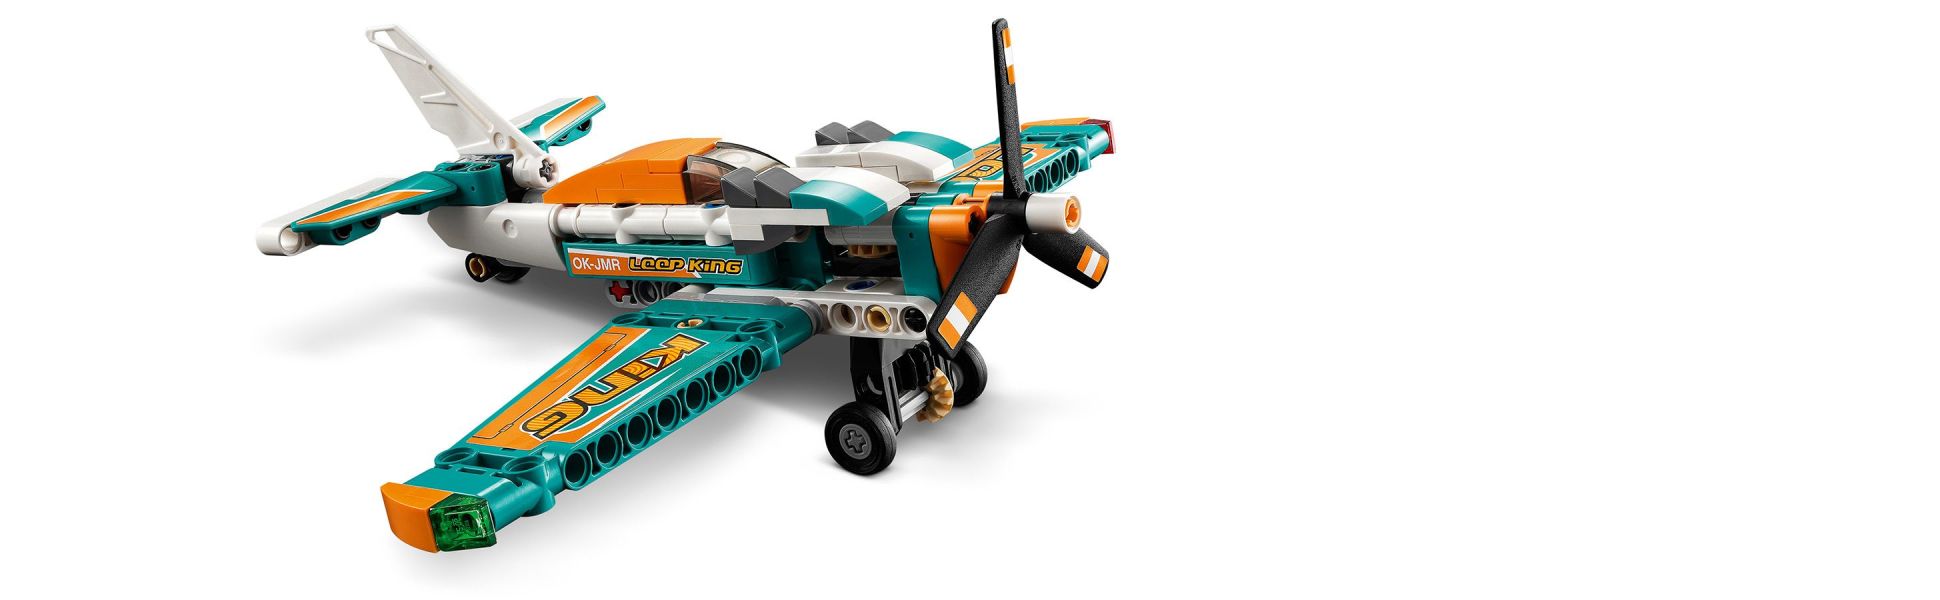 LEGO Technic Race Plane 42117 Educational Toy Jet Plane, 2in1